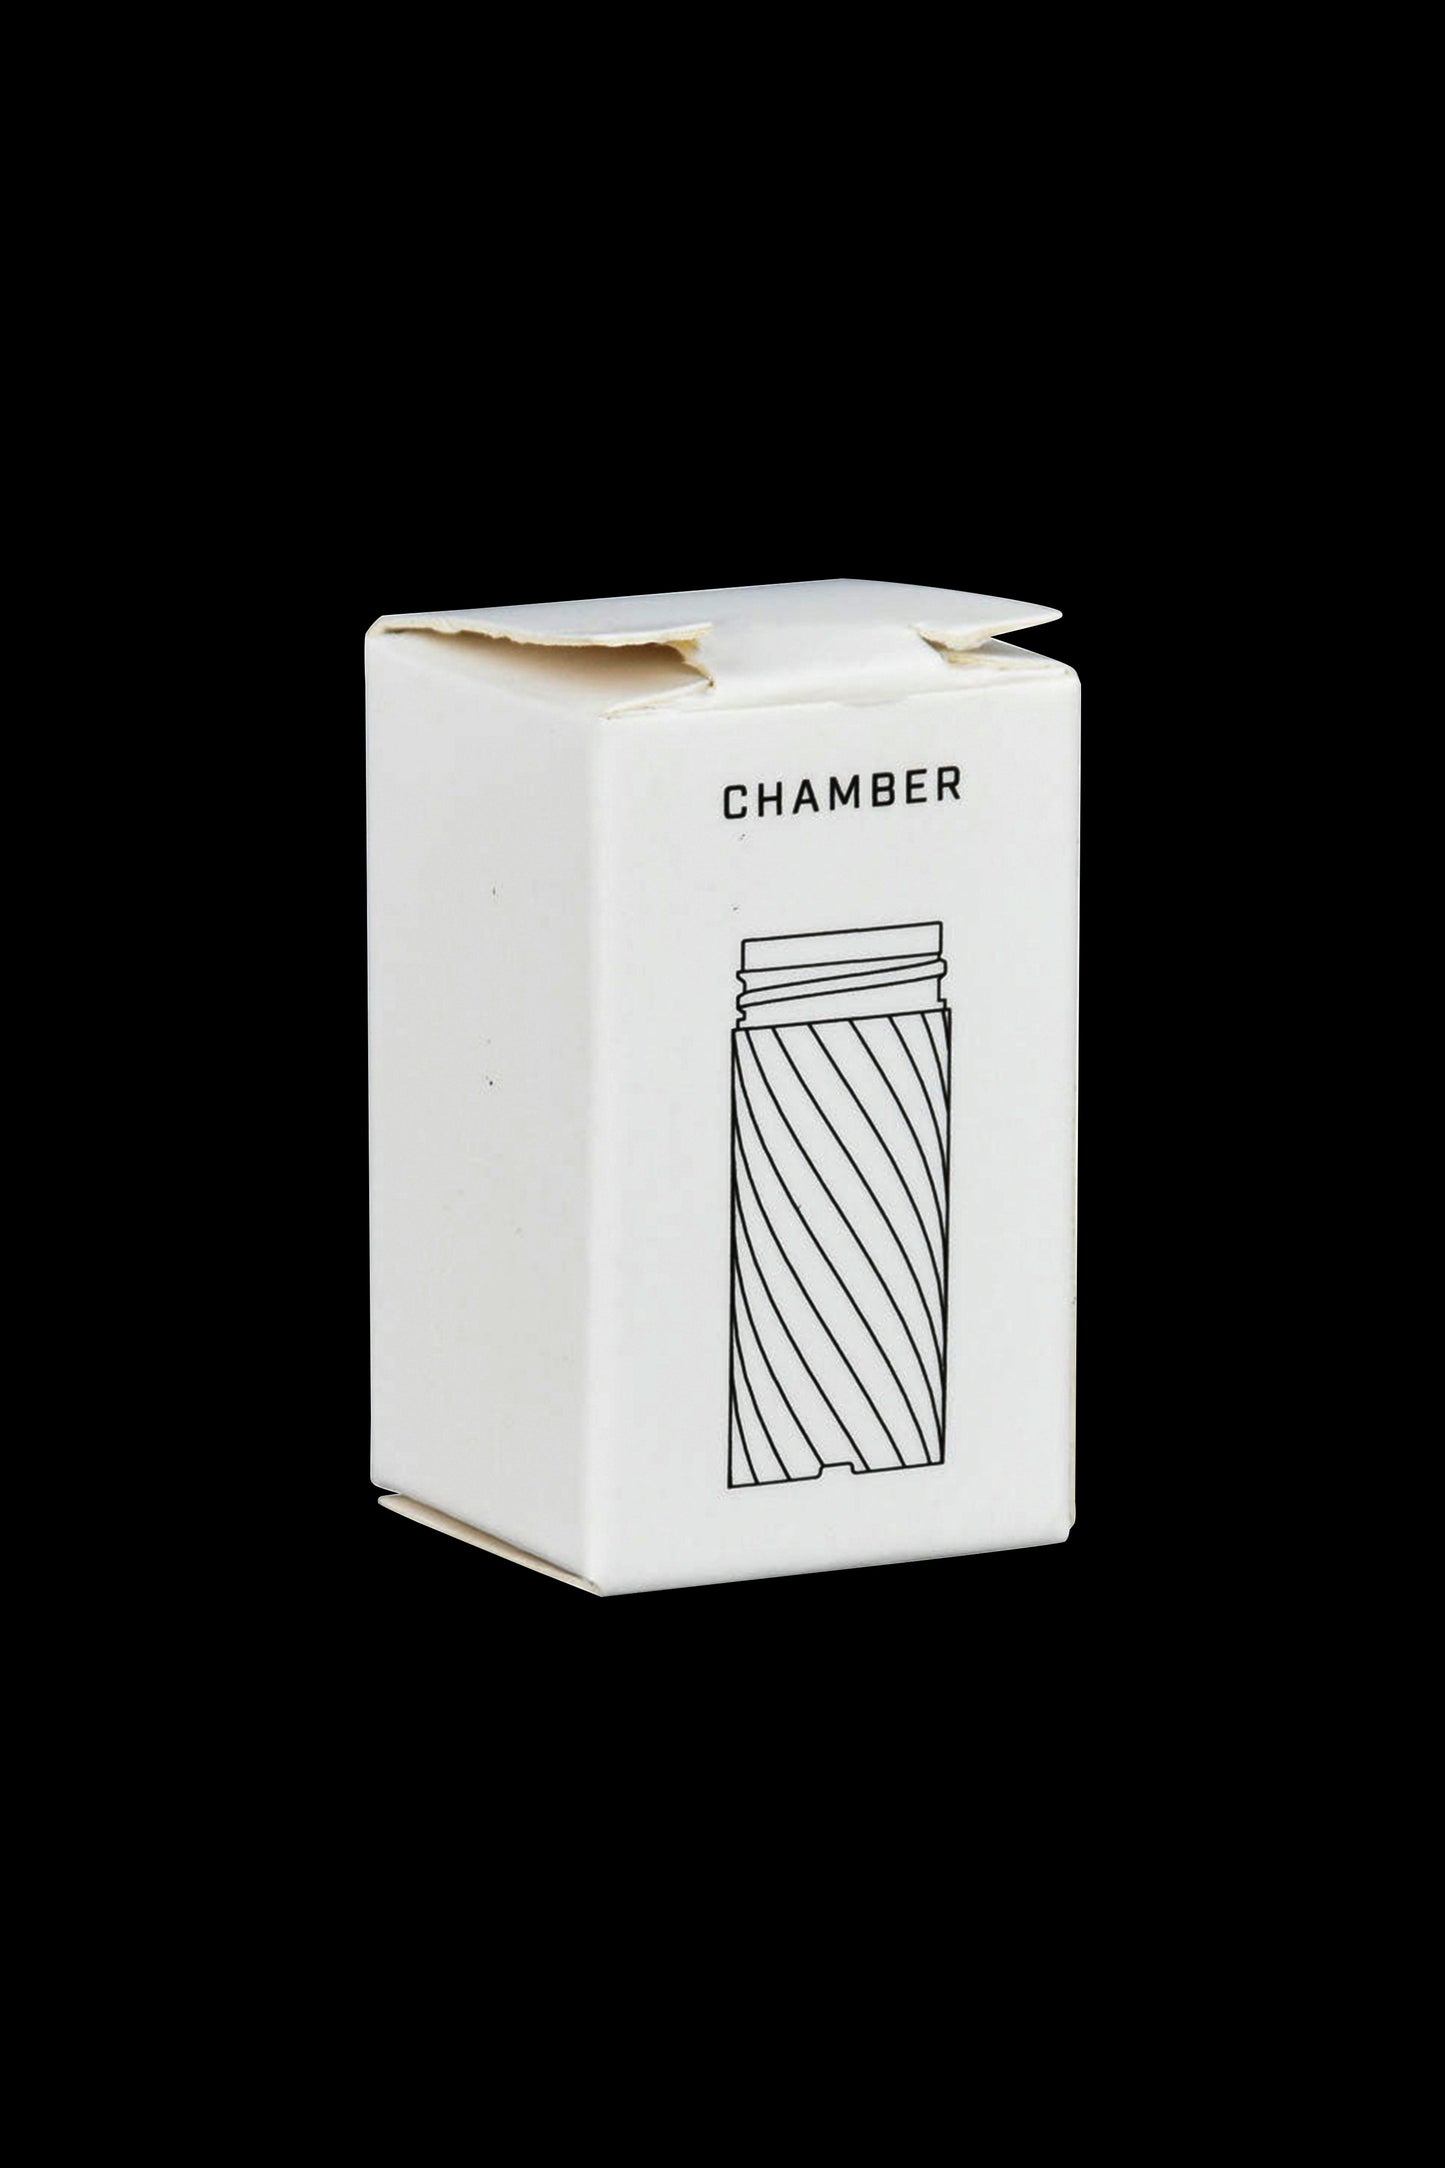 Puffco Plus 3.0 Ceramic Chamber Best Sales Price - Accessories